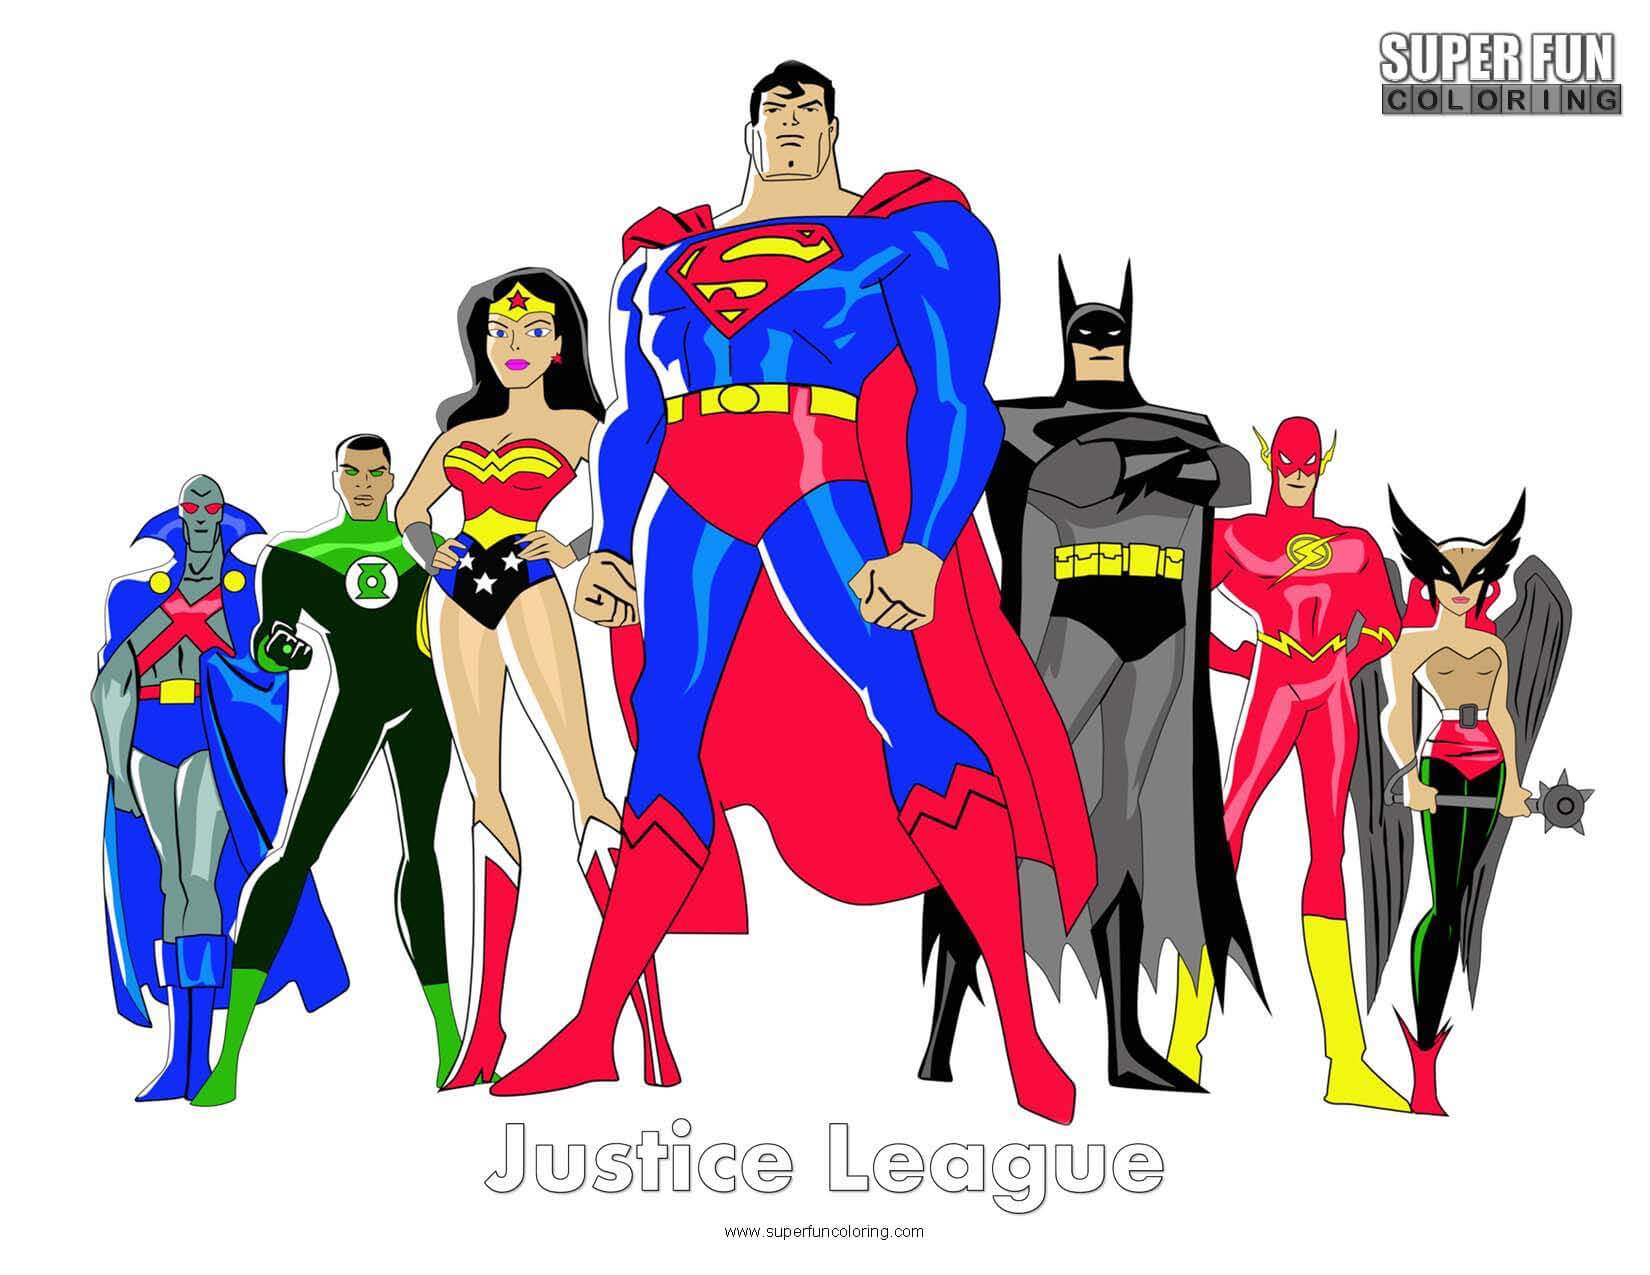 Justice League Free Superhero Coloring Page